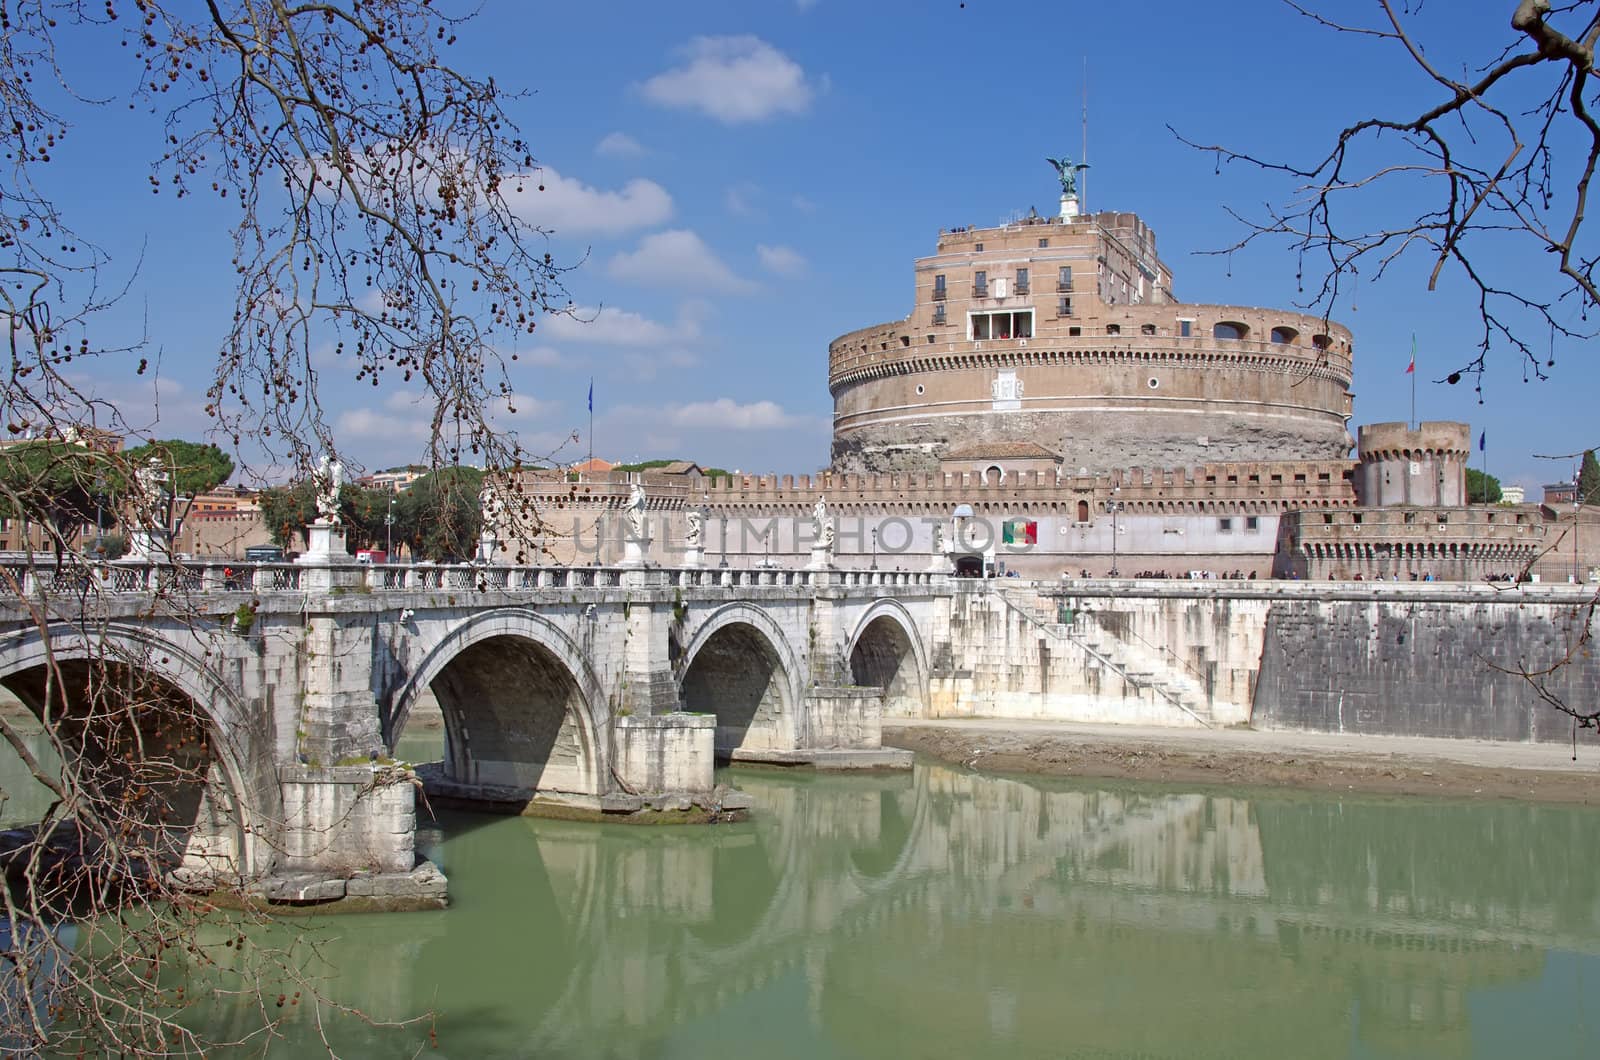 Old Rome buildings: Bridge and Castle of Saint Angelo